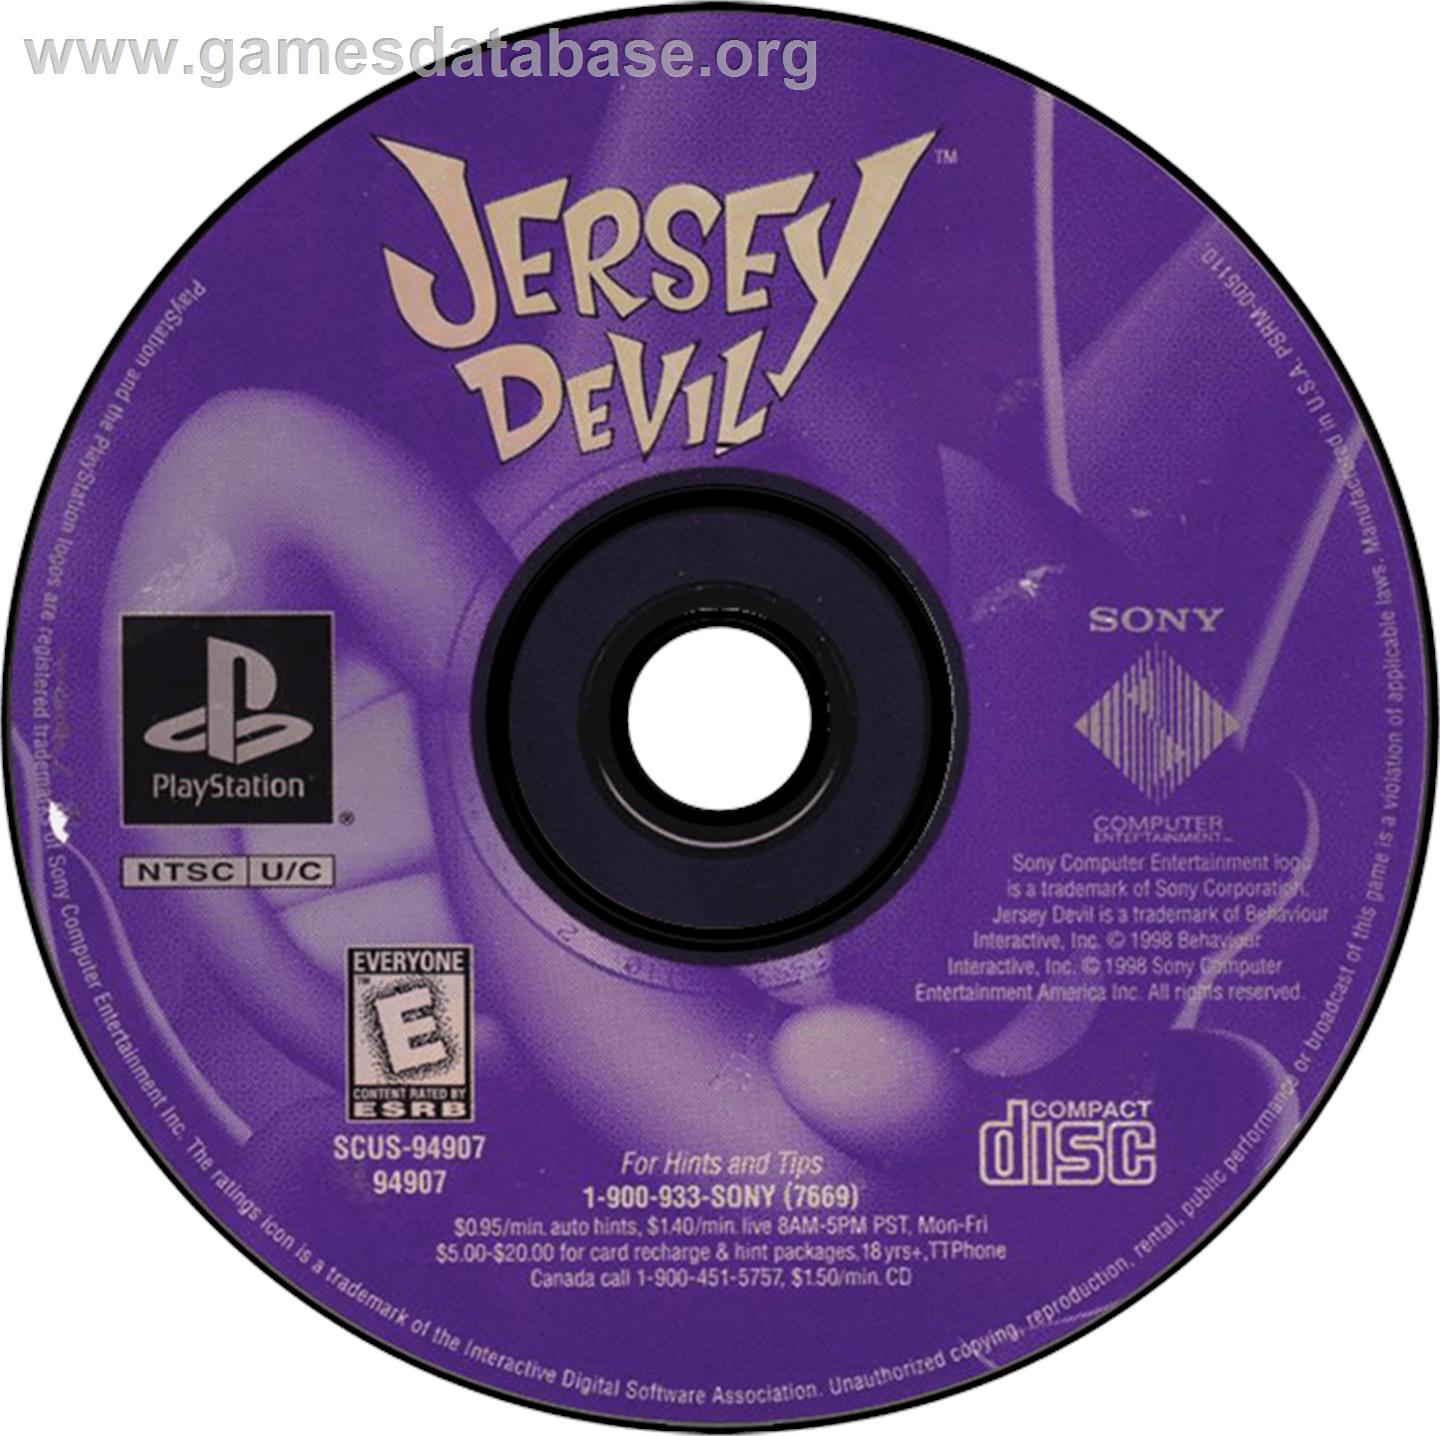 Jersey Devil - Sony Playstation - Artwork - Disc